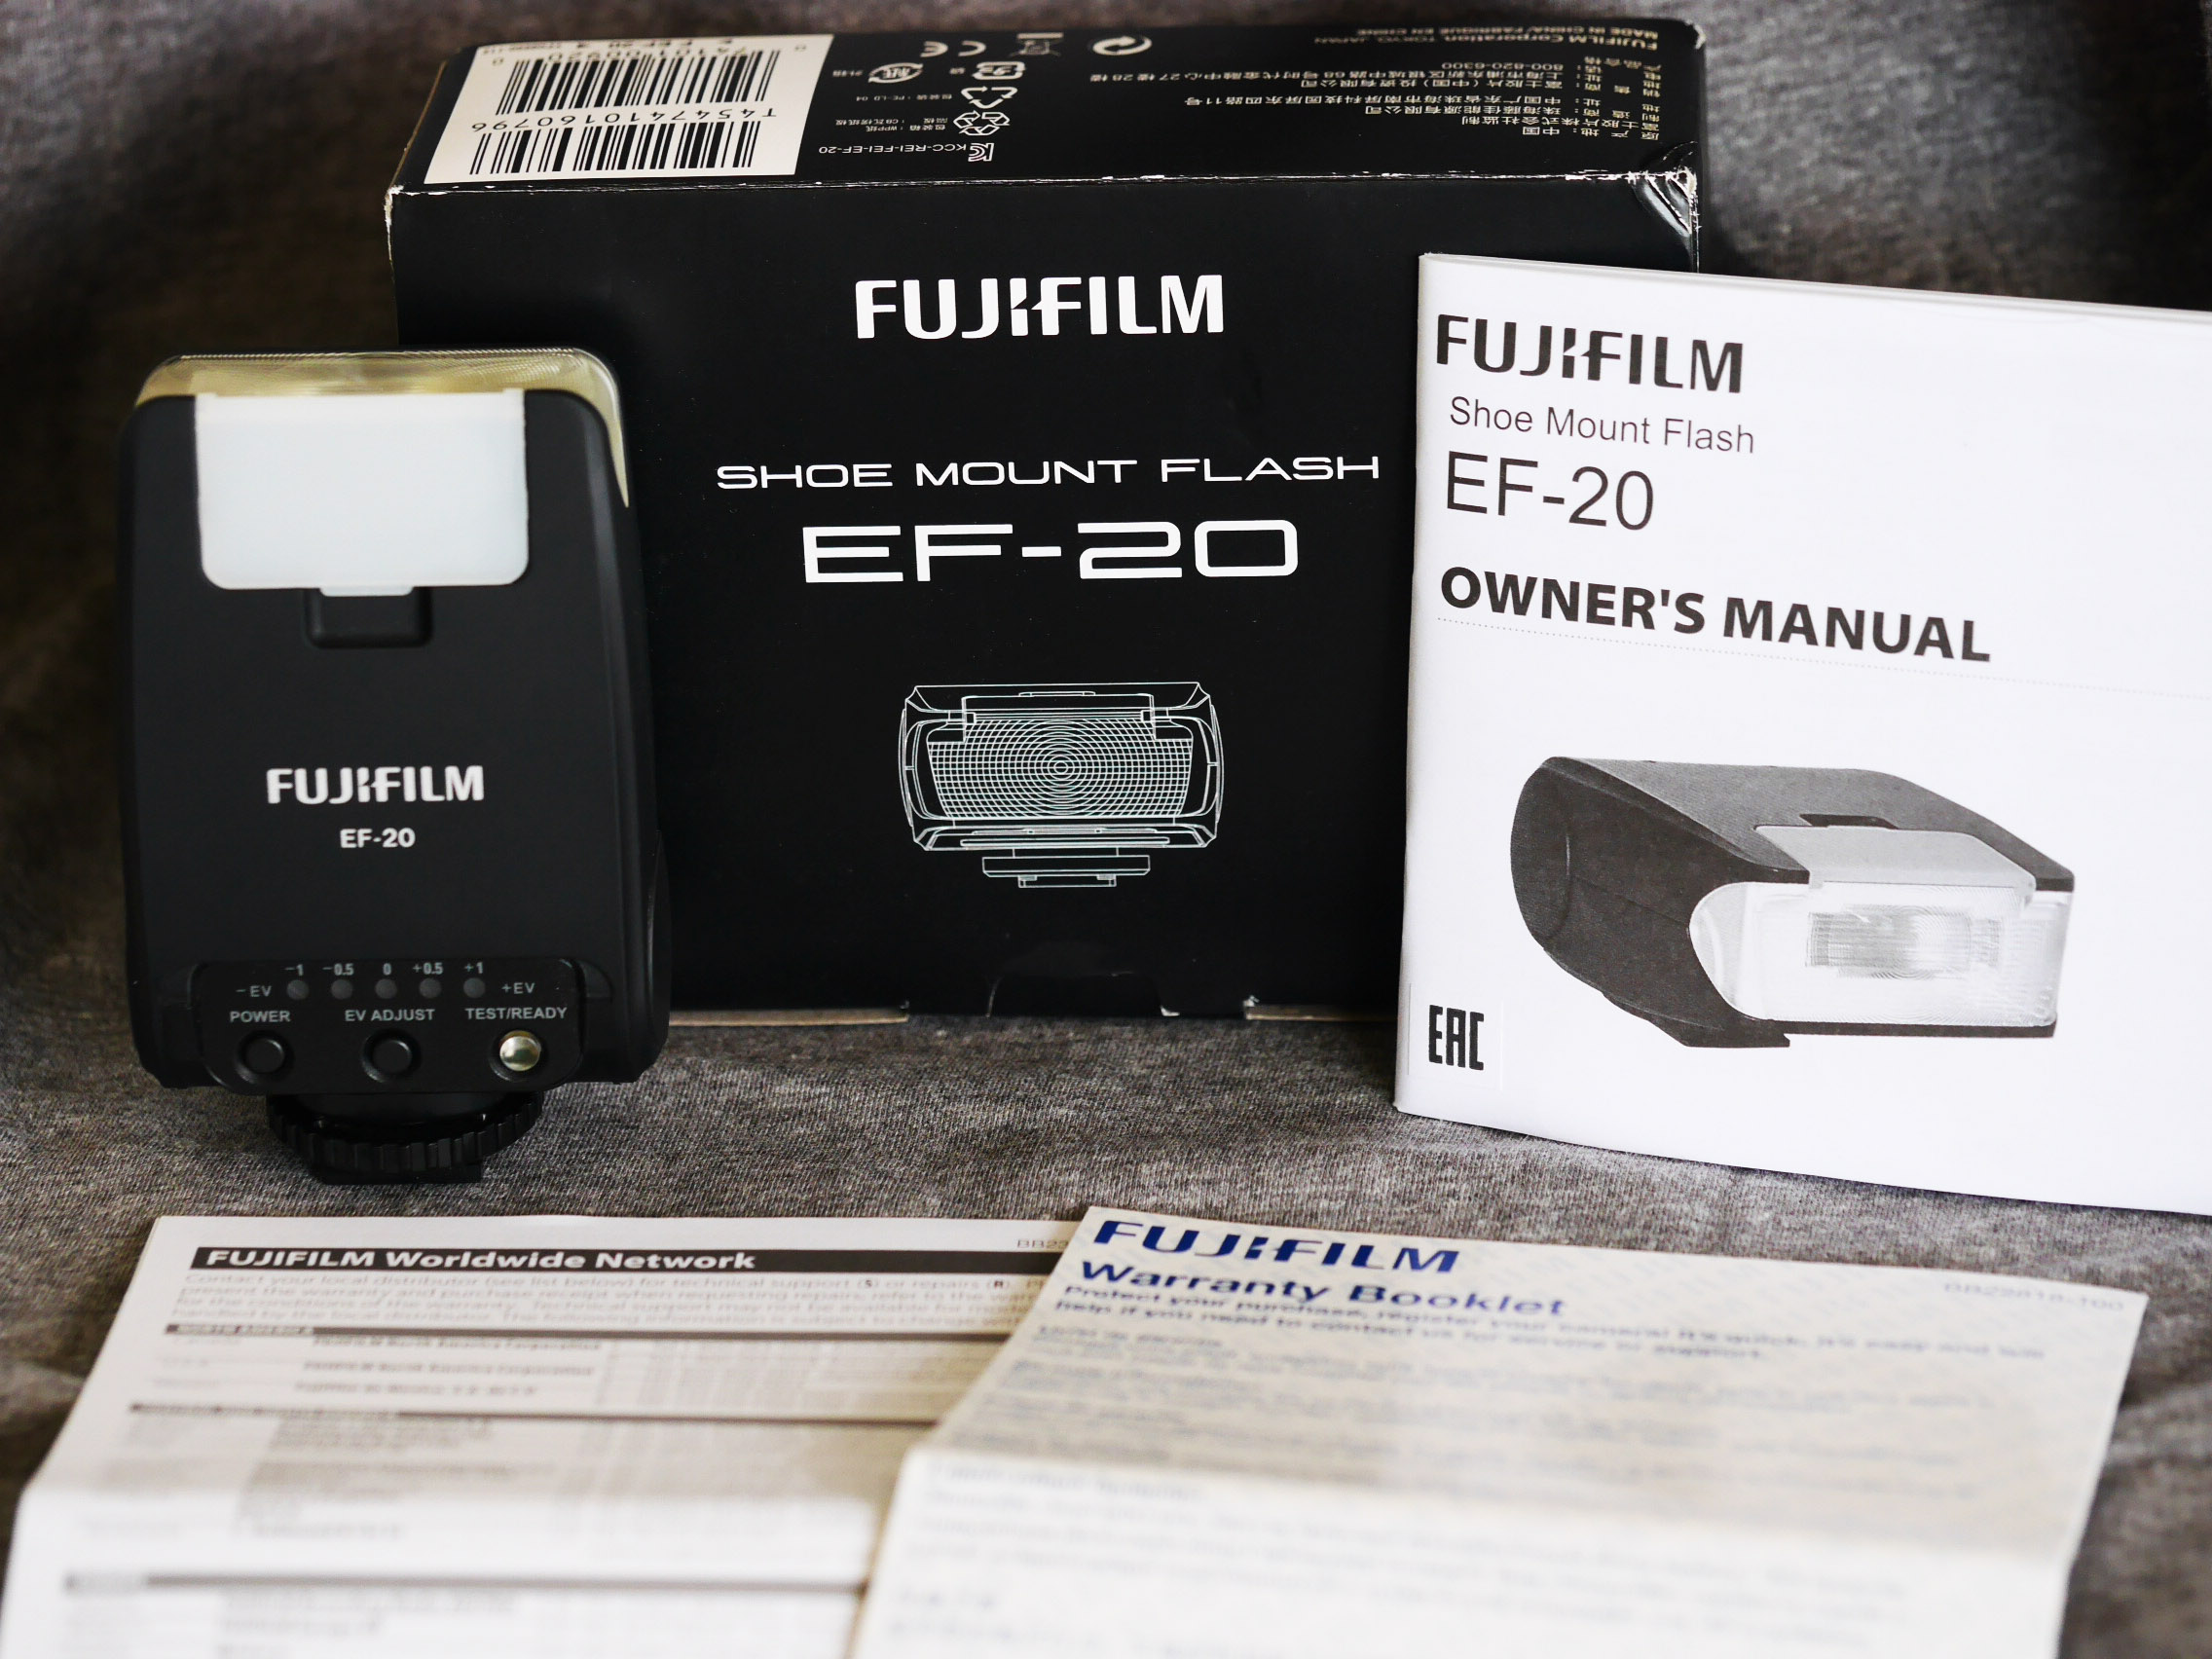 Fujifilm Fuji Shoe mount flash EF-20 in Box for Fujifilm Cameras, E-F20, EF20